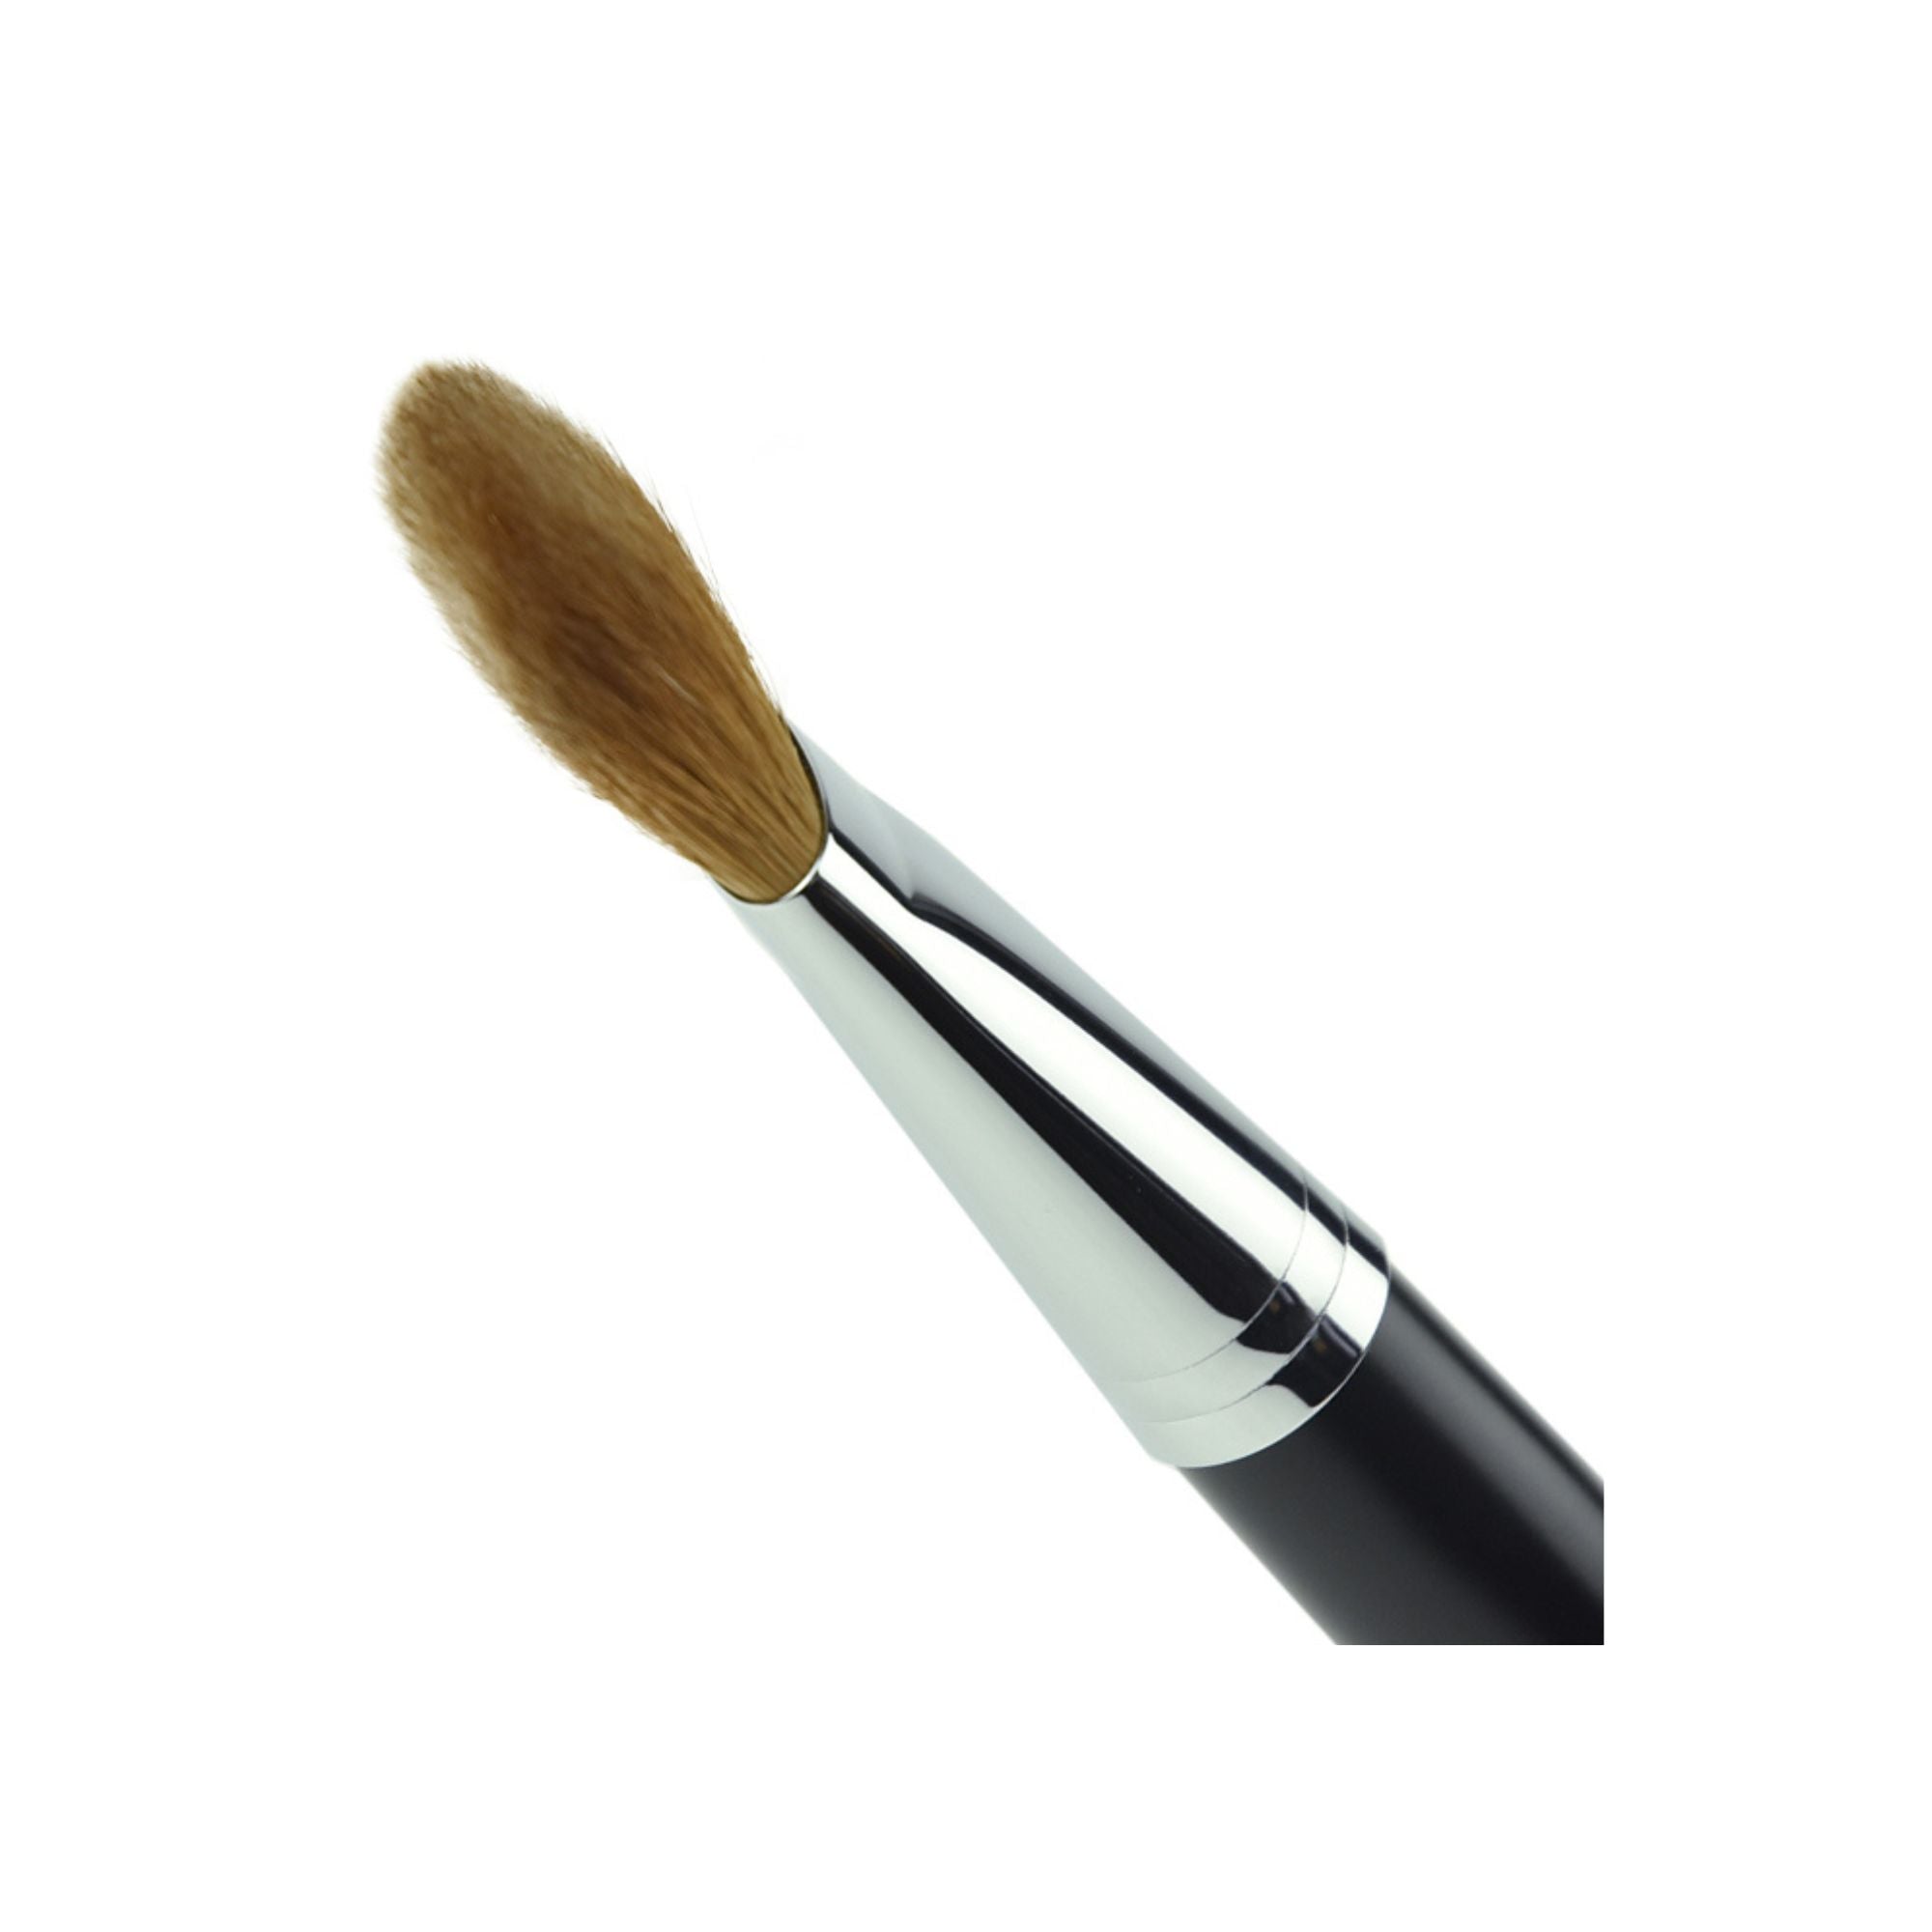 Tanseido KF 20 Liquid Foundation Brush (8cm, Curving) - Fude Beauty, Japanese Makeup Brushes